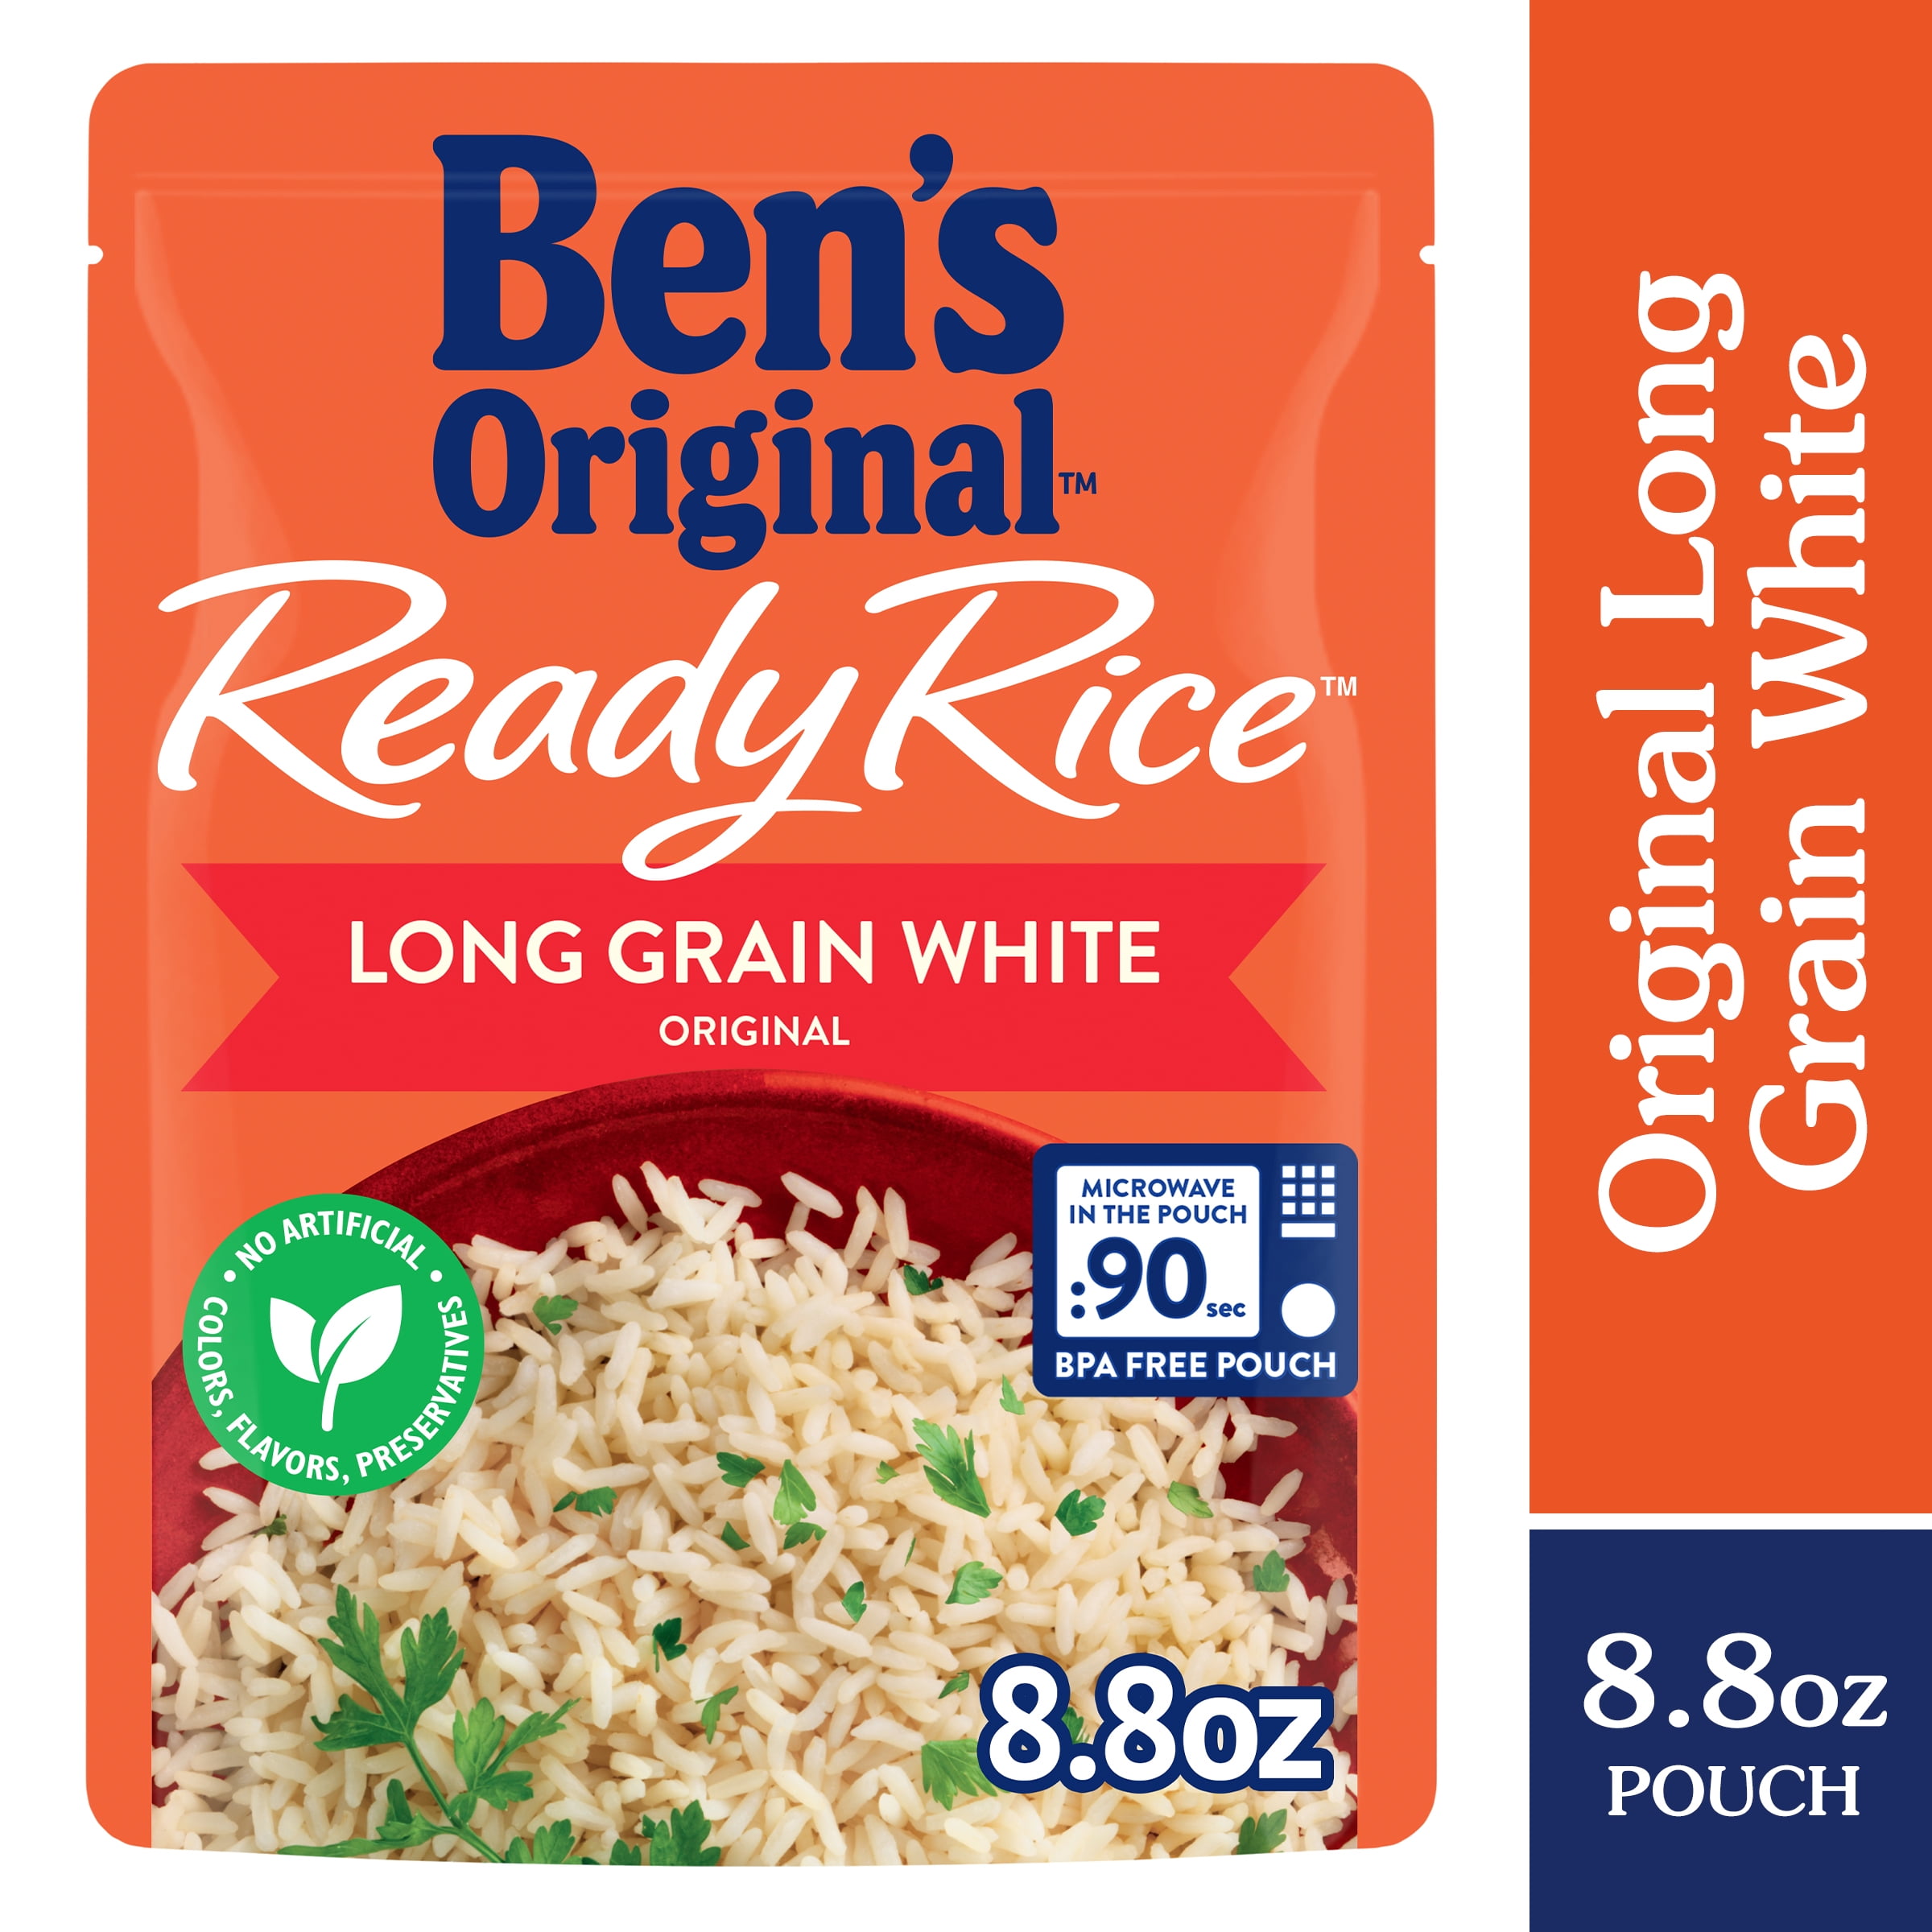 BEN'S ORIGINAL Ready Rice Original Long Grain White Rice, Easy Dinner Side, 8.8 OZ Pouch